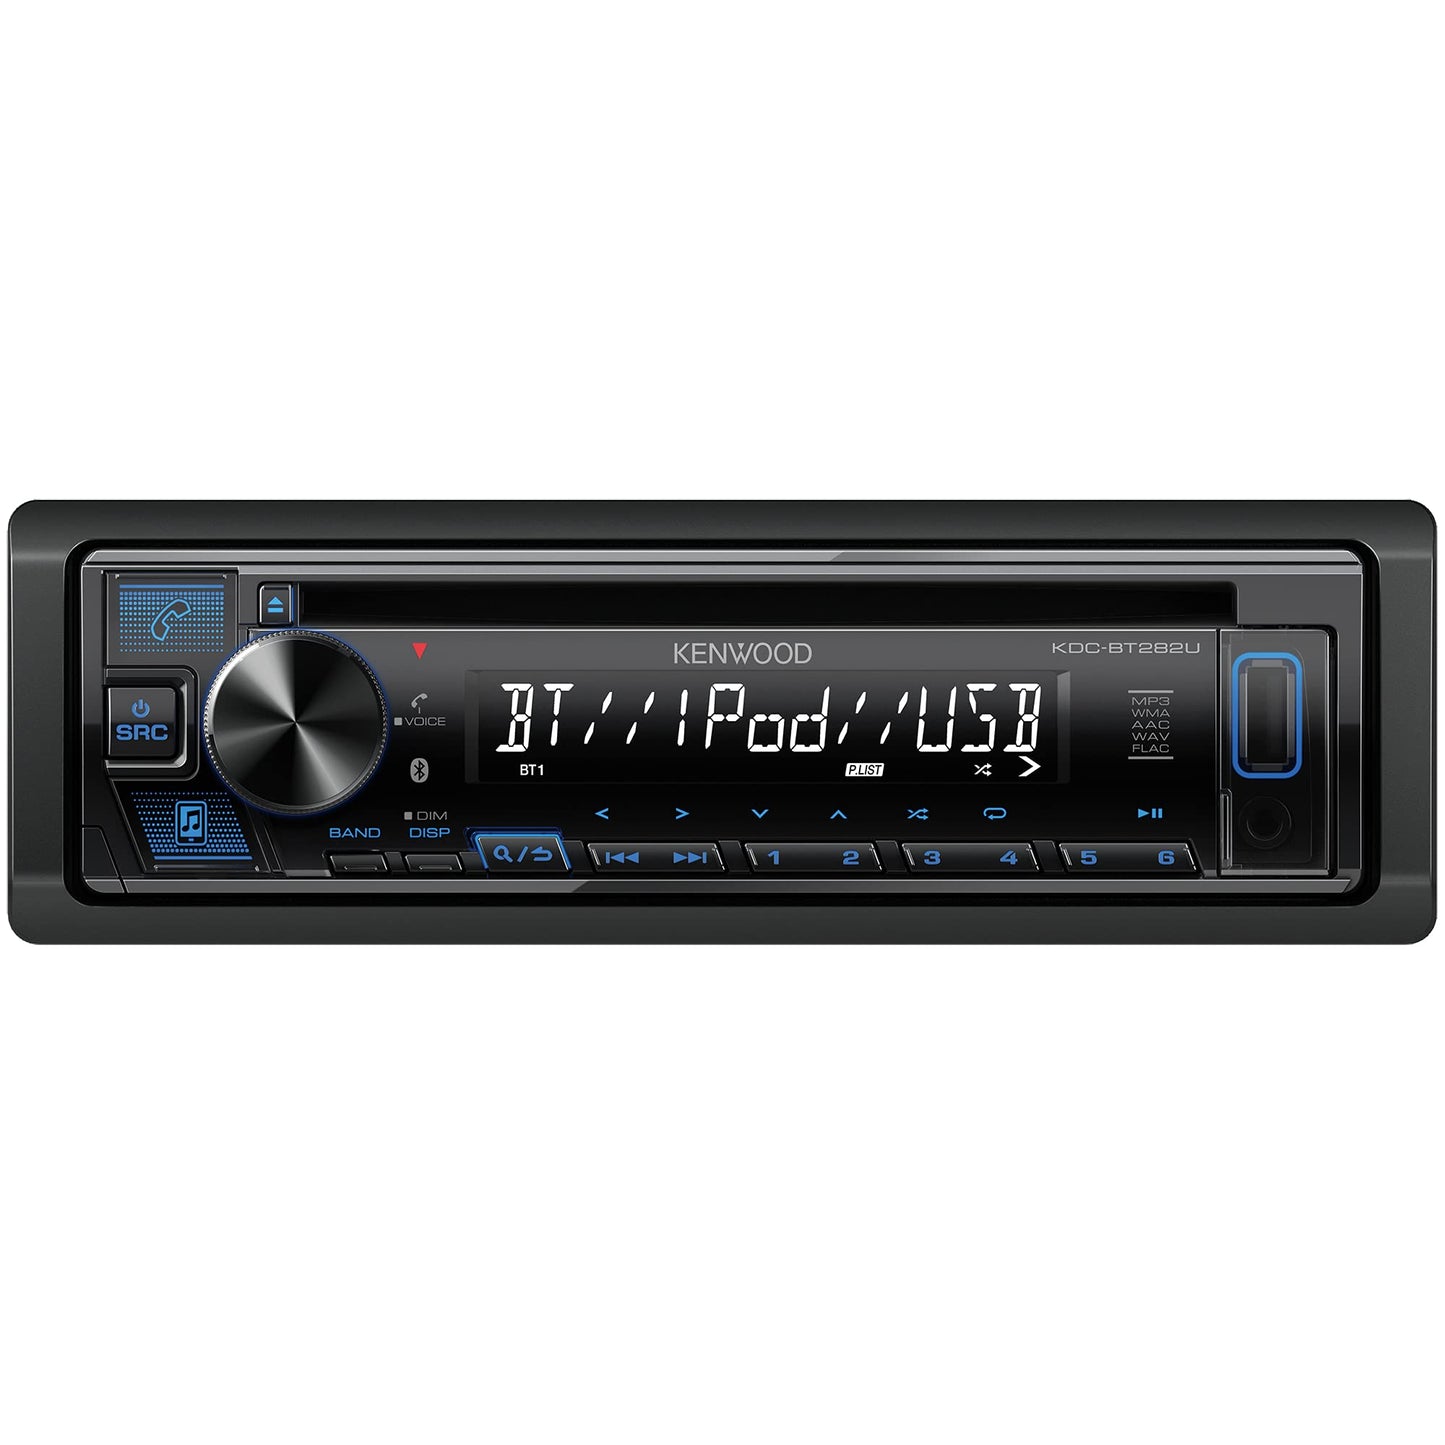 KENWOOD KDC-BT282U CD Car Stereo - AM FM, Bluetooth Audio, USB MP3, FLAC